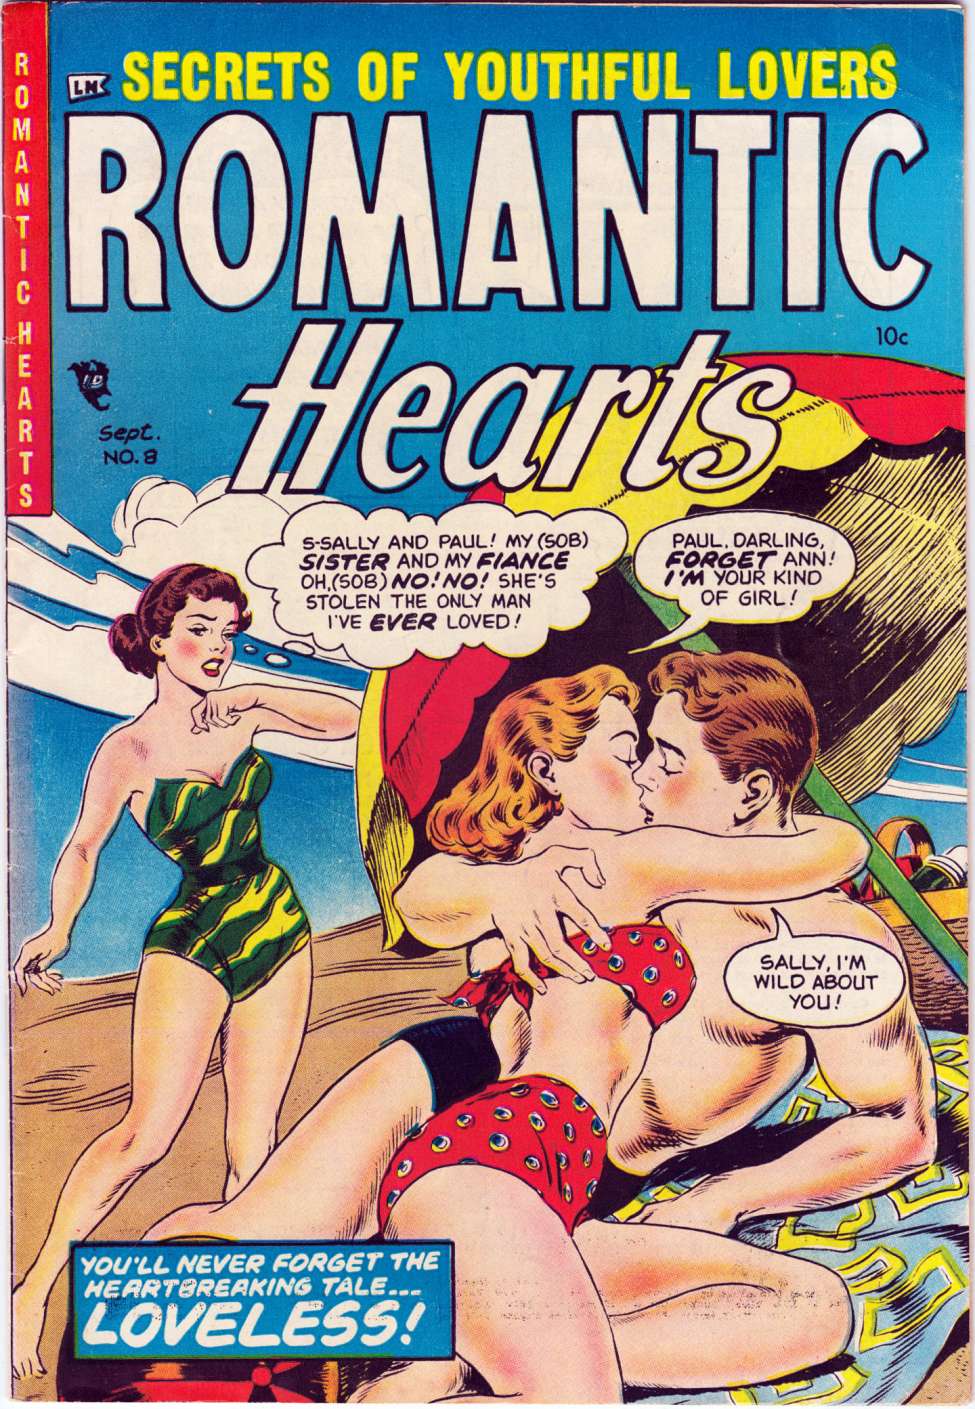 Comic Book Cover For Romantic Hearts v2 8 (alt) - Version 2